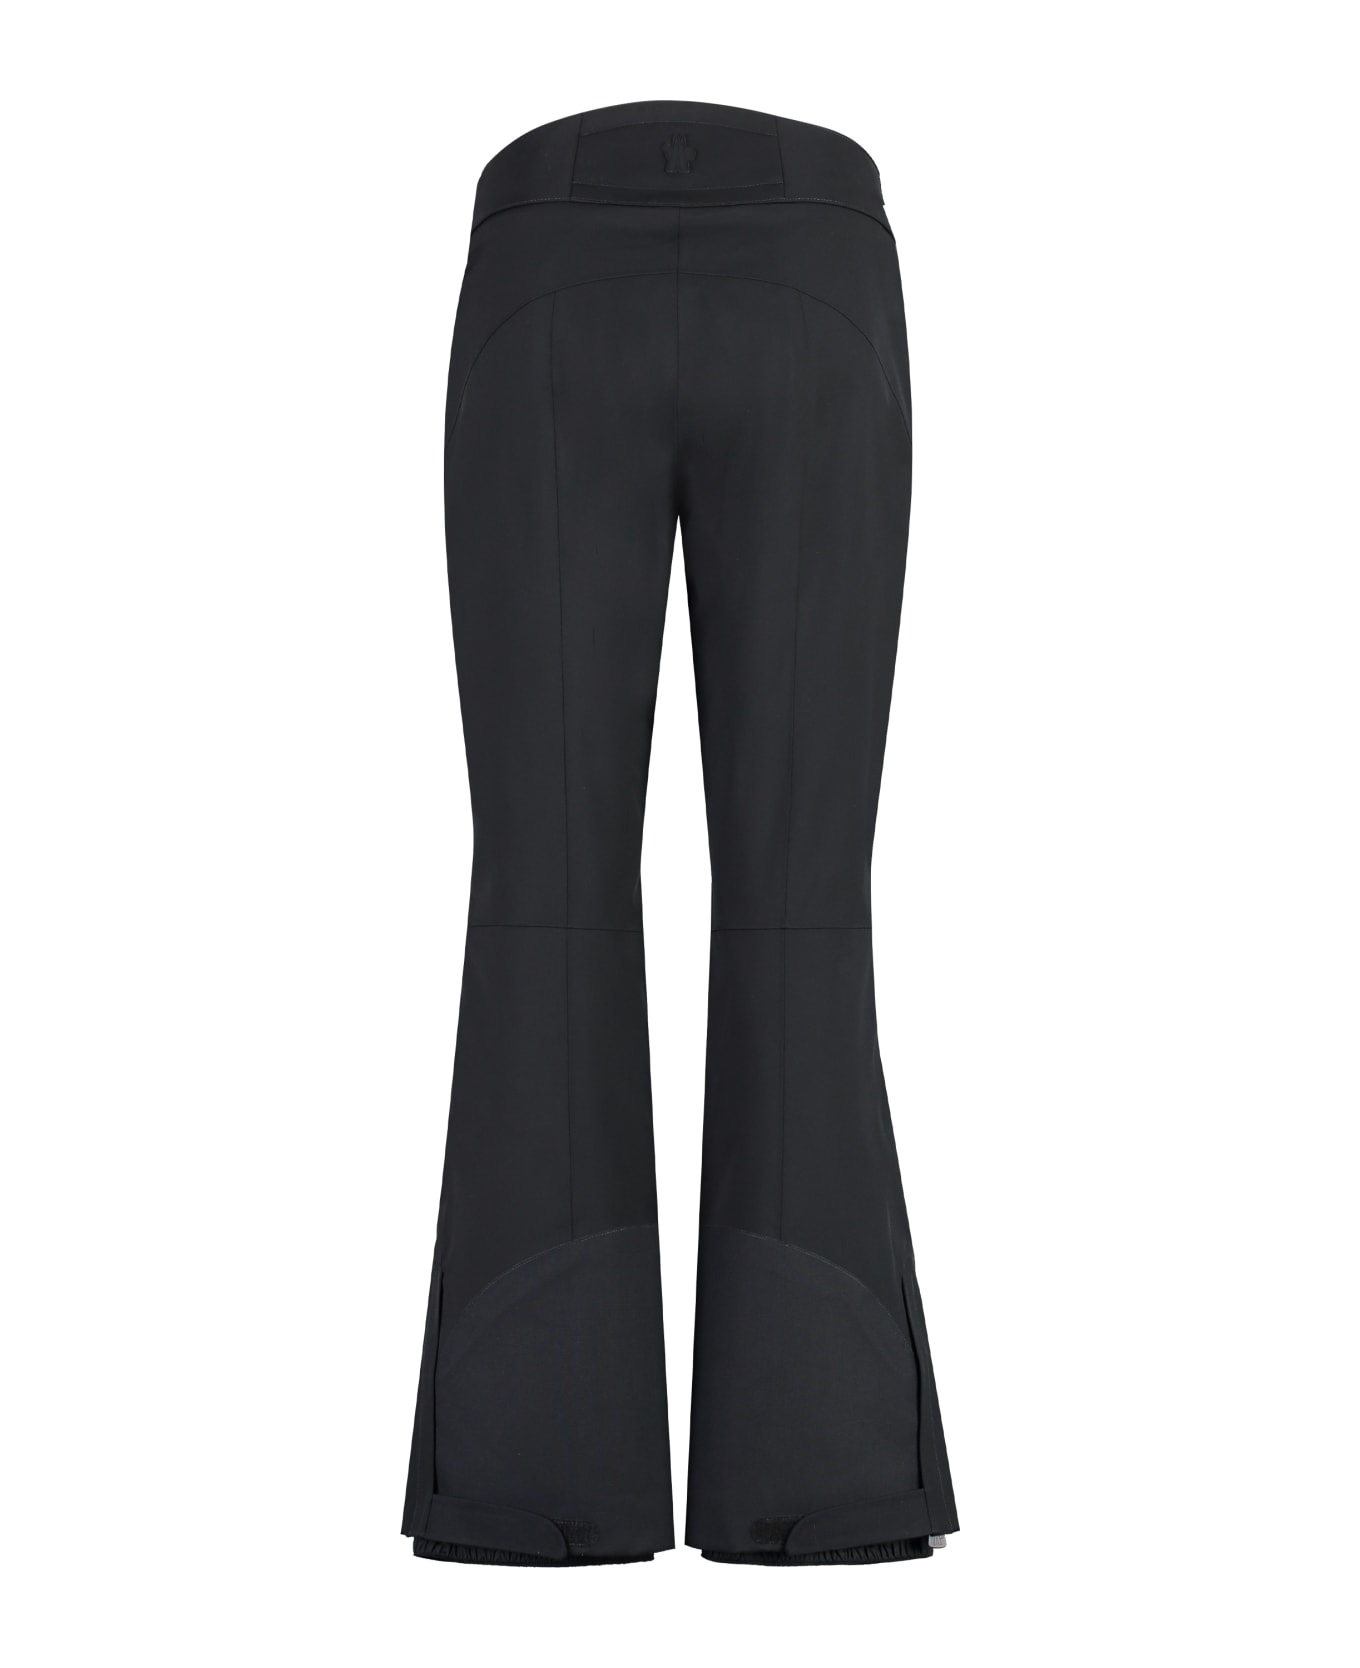 Moncler Grenoble Technical Fabric Pants - black